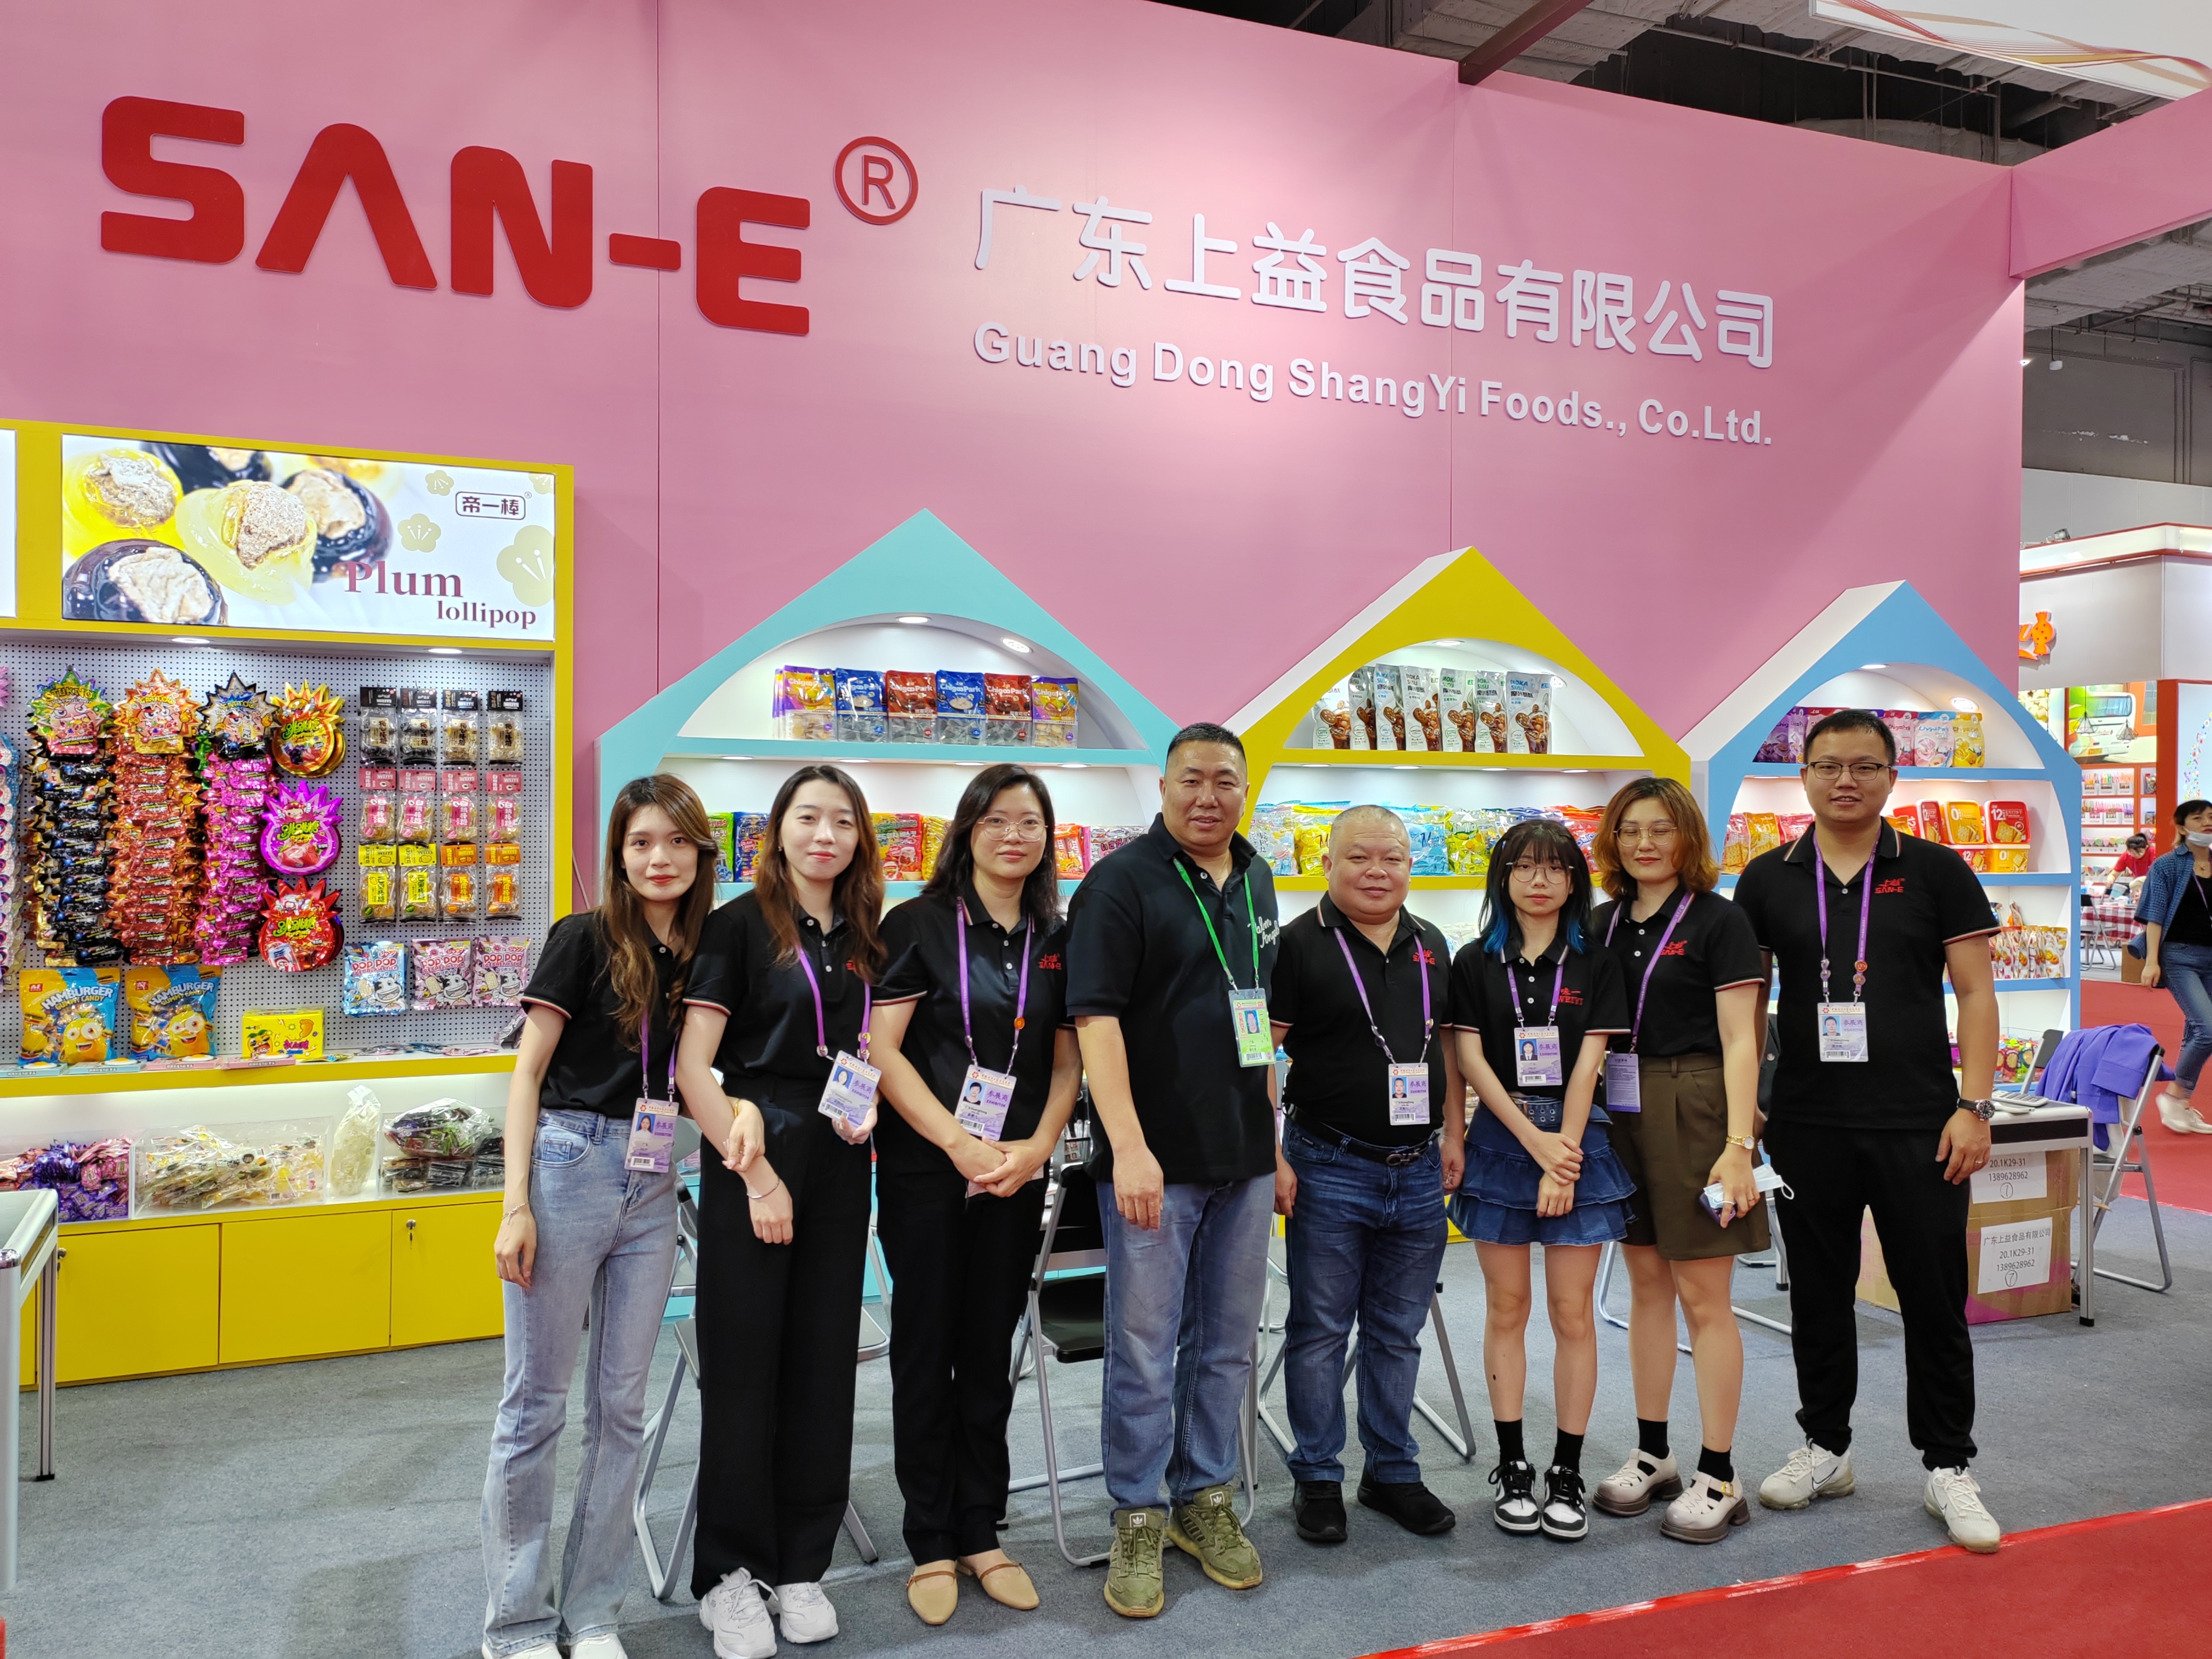 133th Canton Fair: China Import & Export Fair, Guangzhou